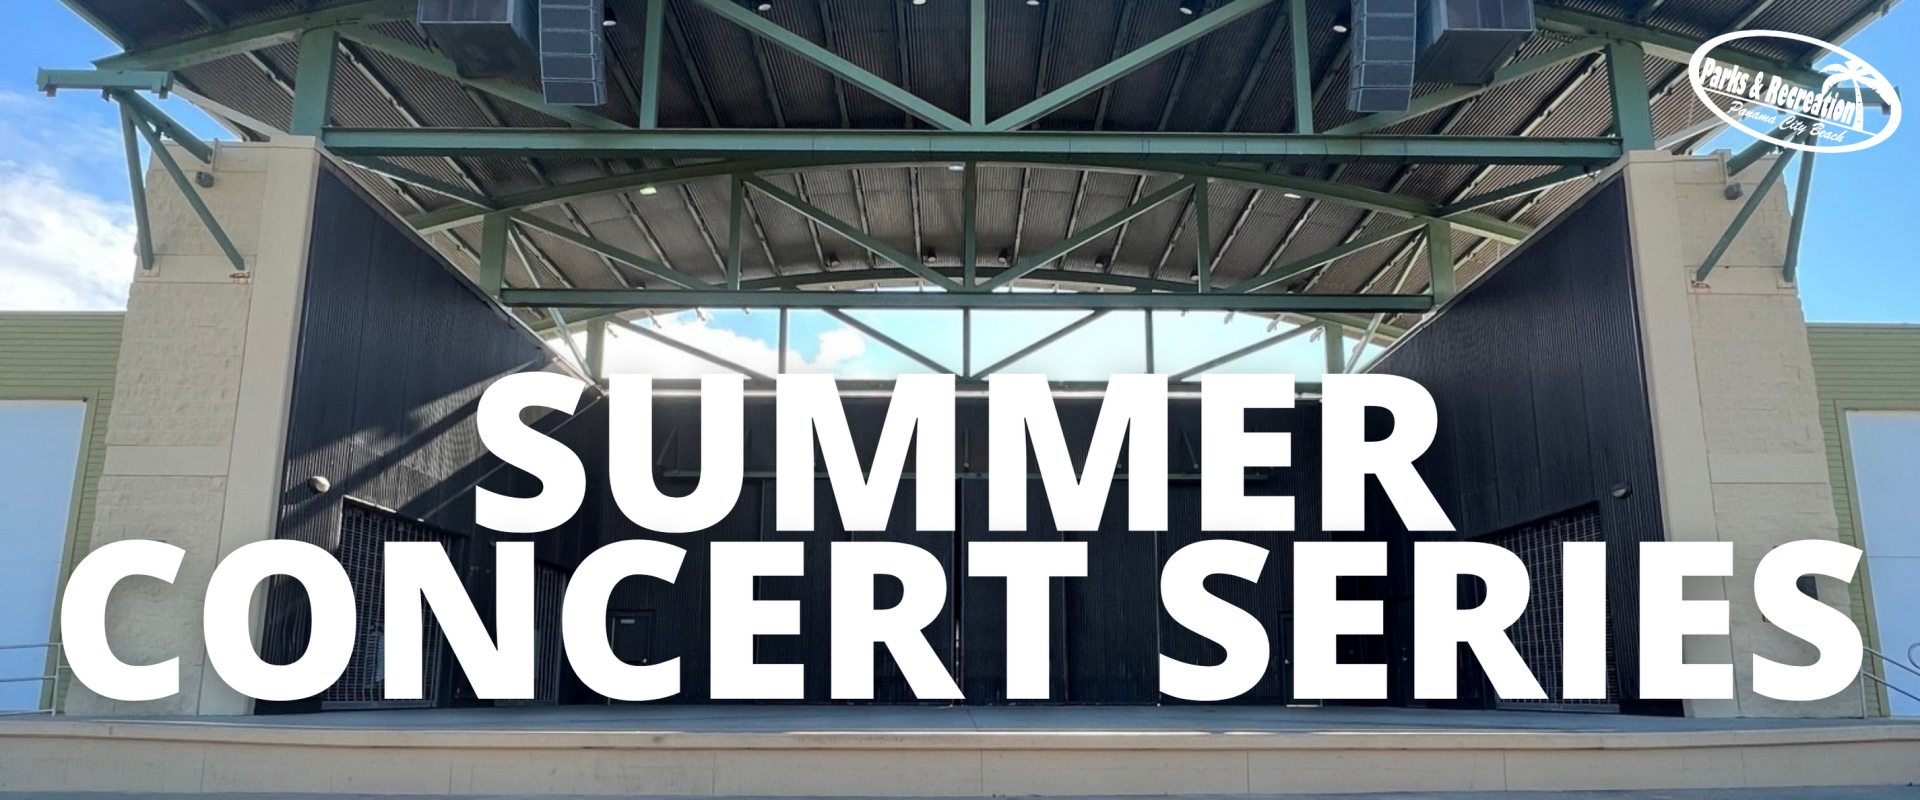 Summer Concert Series  website banner